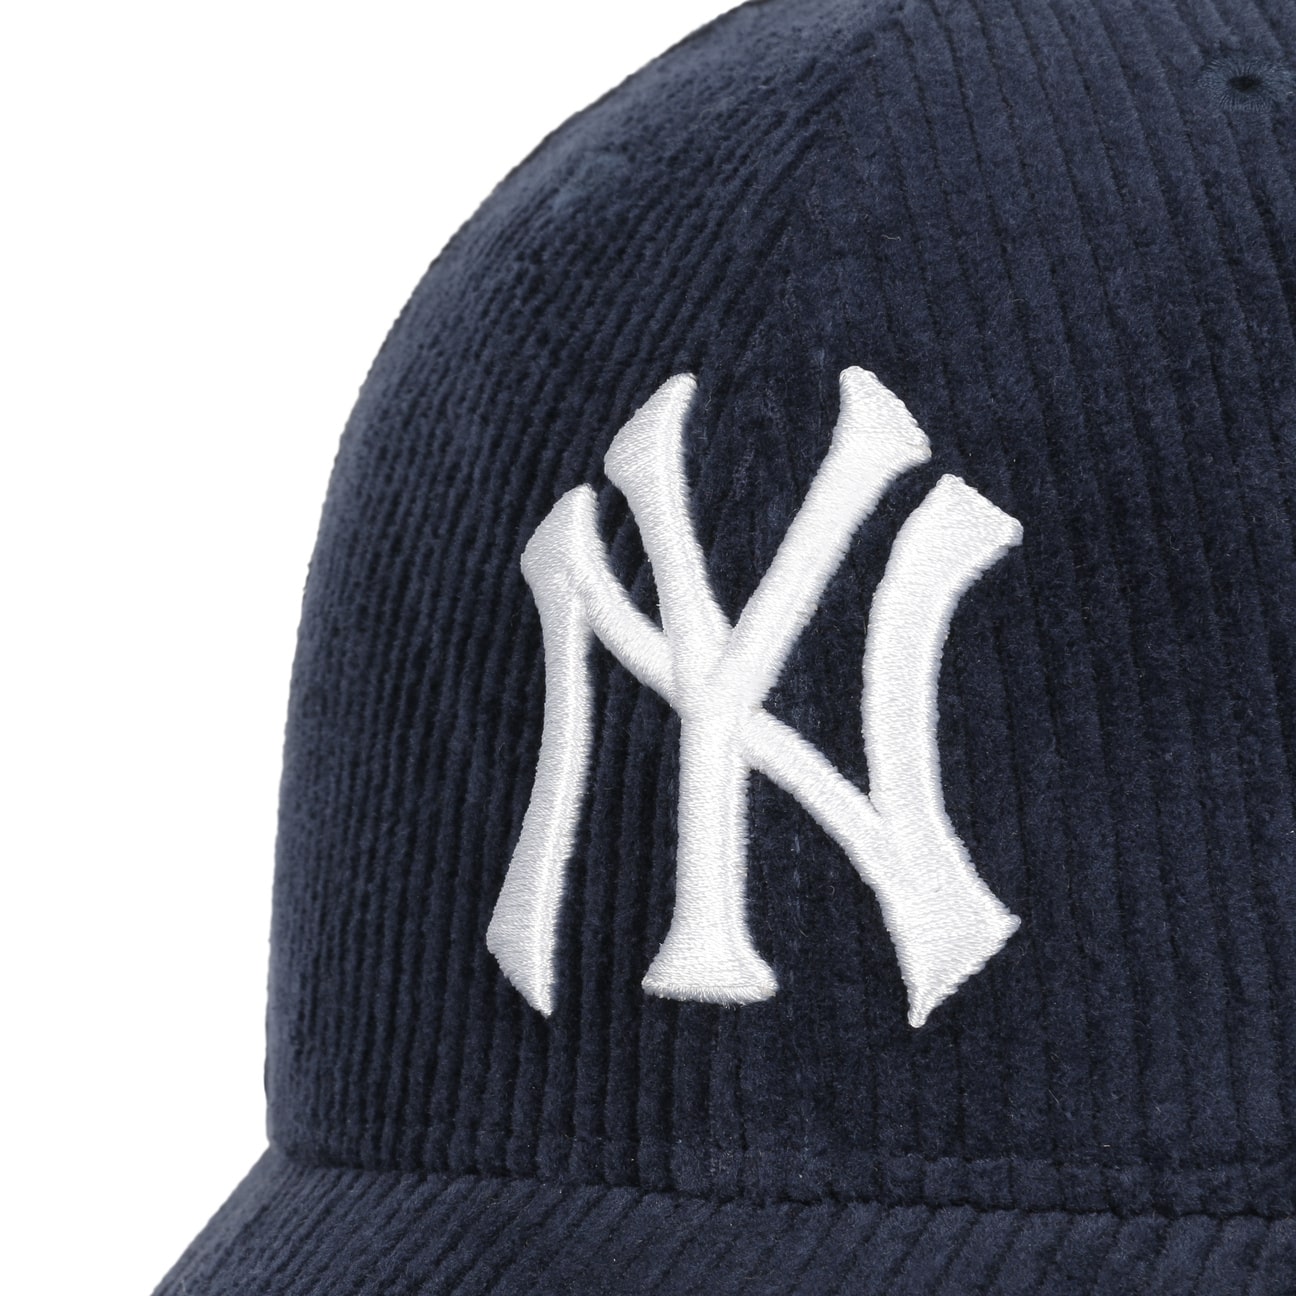 47 MLB New York Yankees Thick Cord 47 MVP Blue